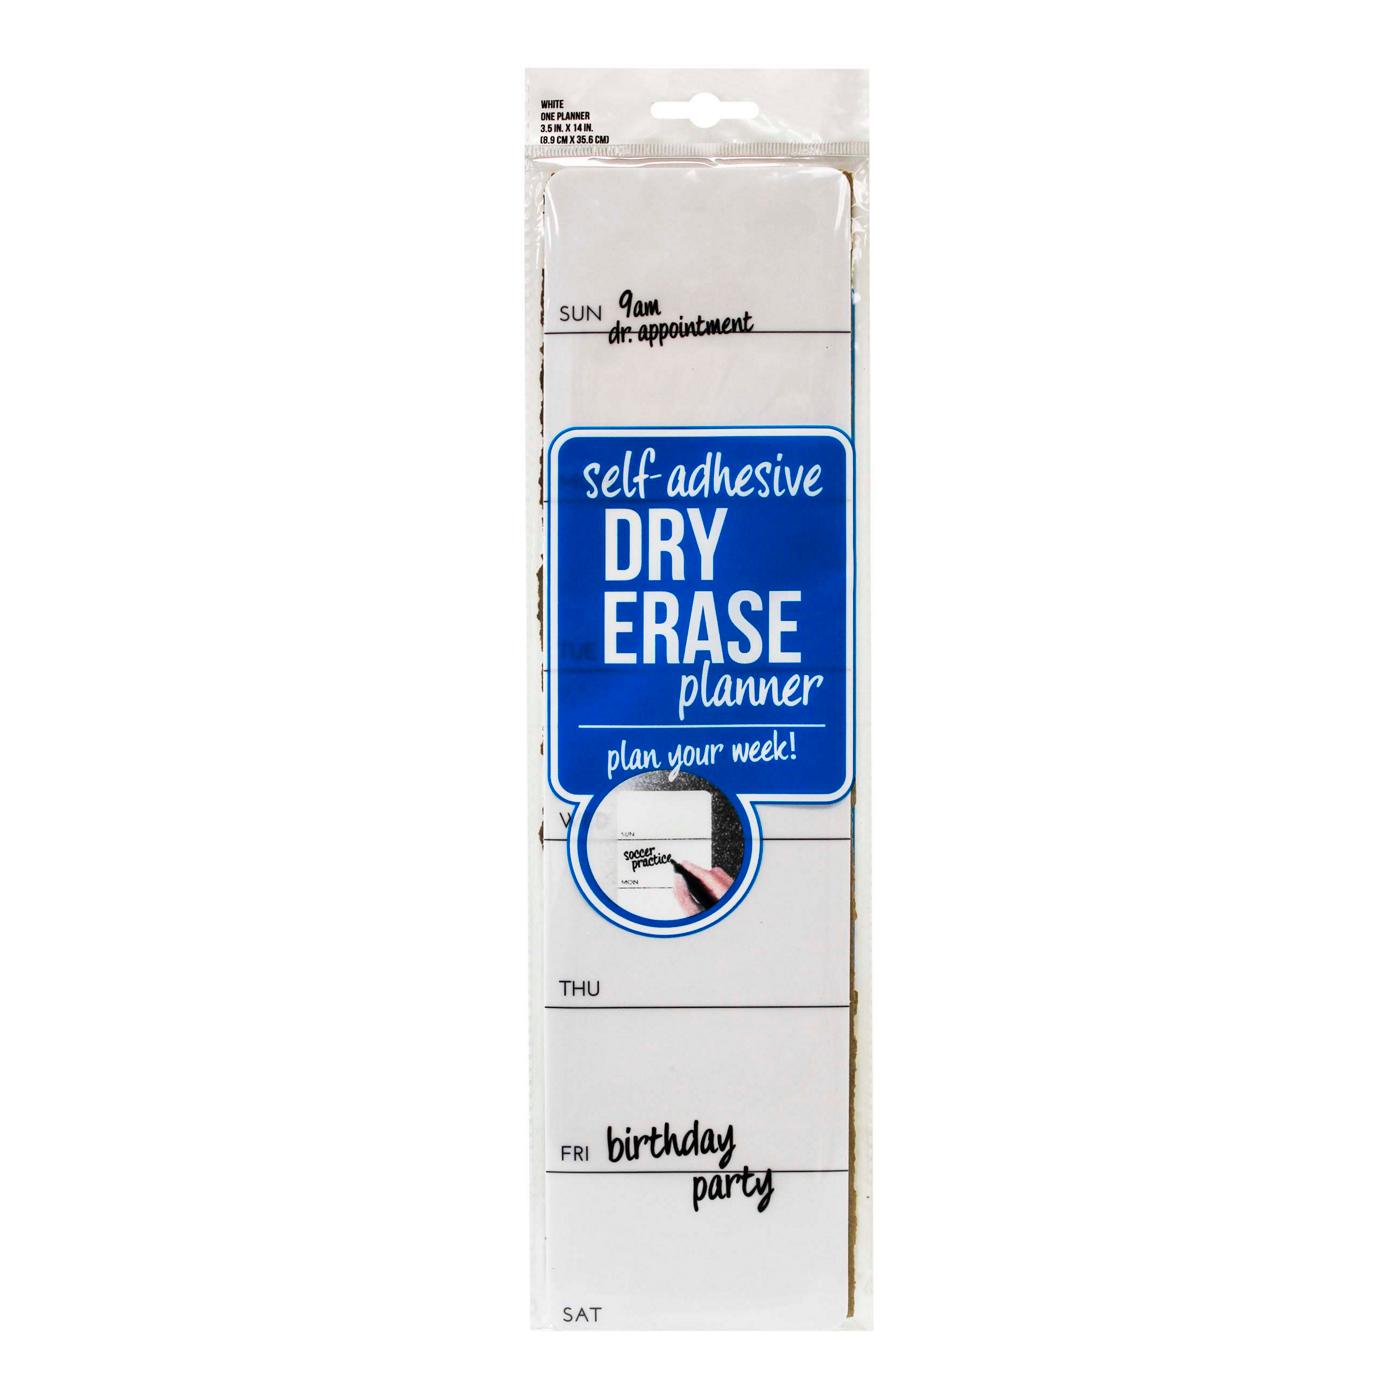 Schroeder & Tremayne Self-Adhesive Dry Erase Planner; image 1 of 2